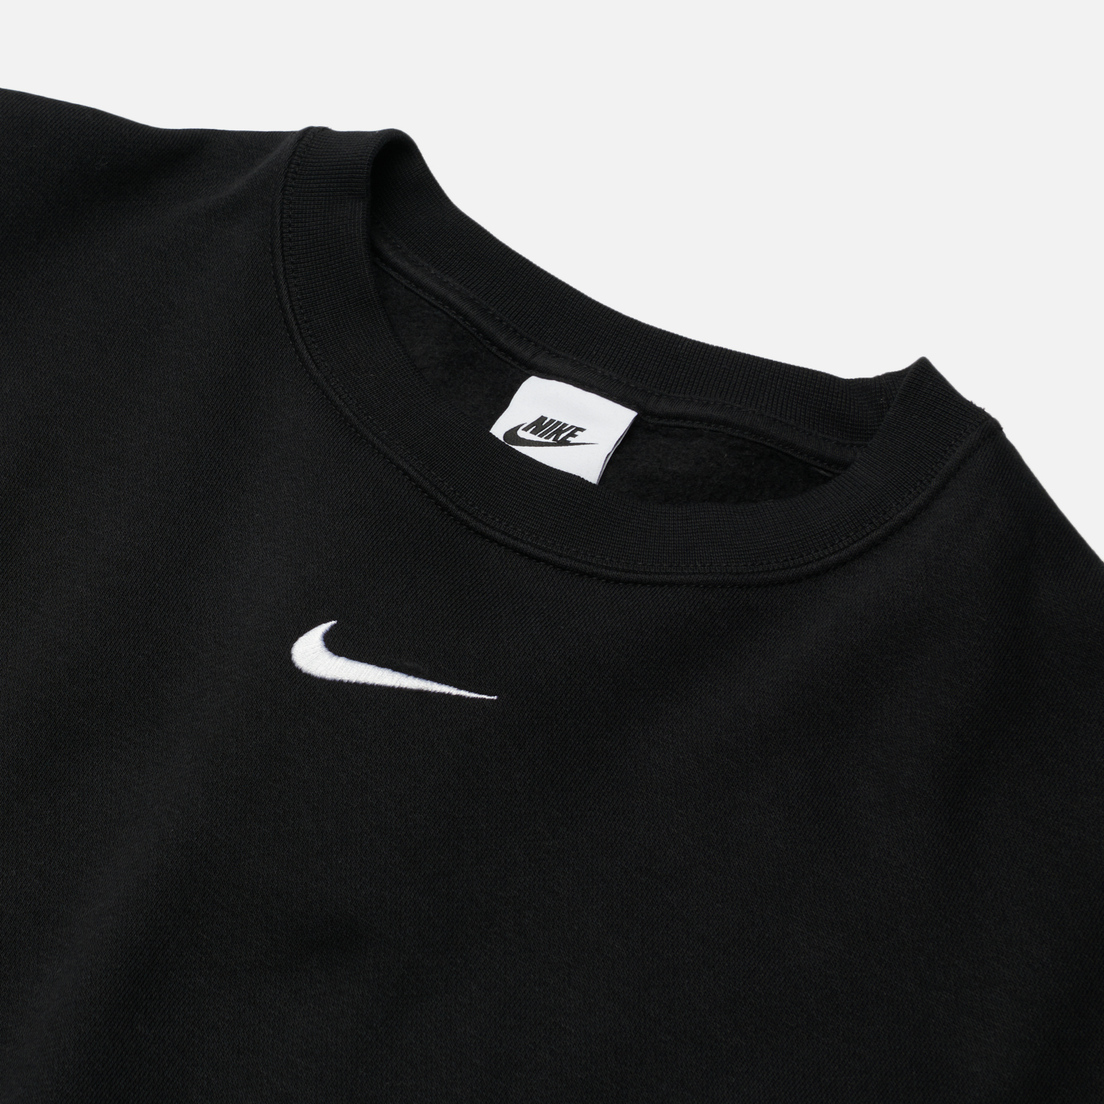 Nike Женская толстовка Essential Collection Fleece Crew